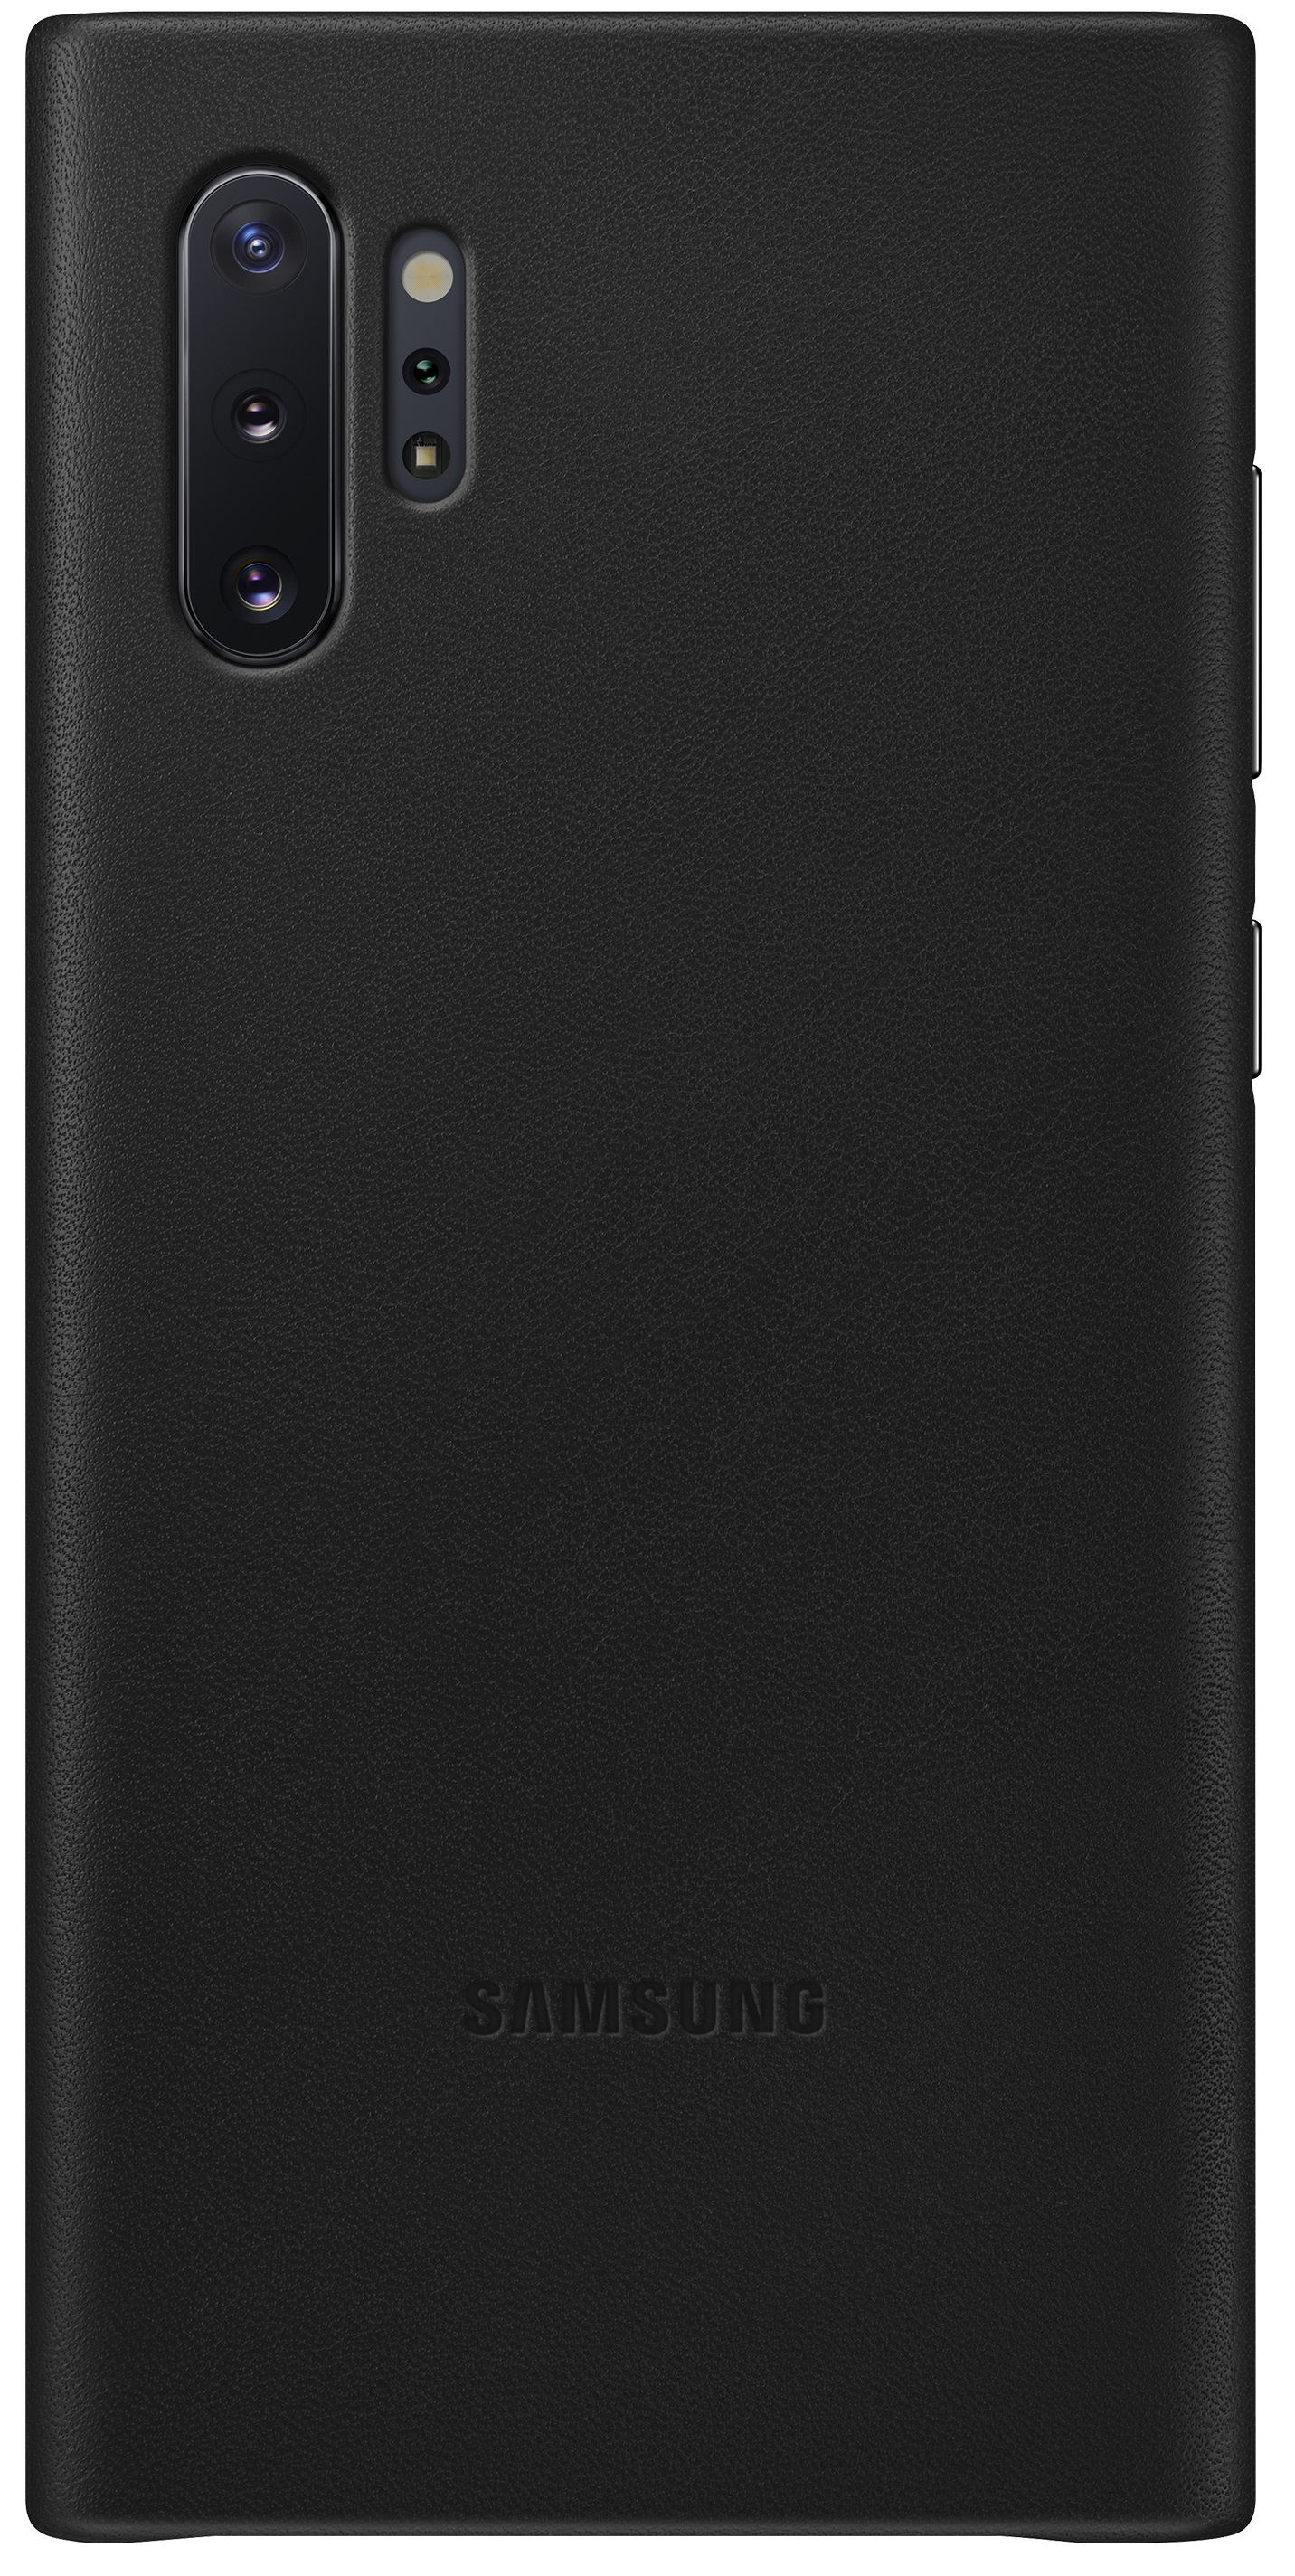 Накладка Samsung Galaxy Note 10 Plus Leather Cover Black (EF-VN975LBEGRU) в Киеве